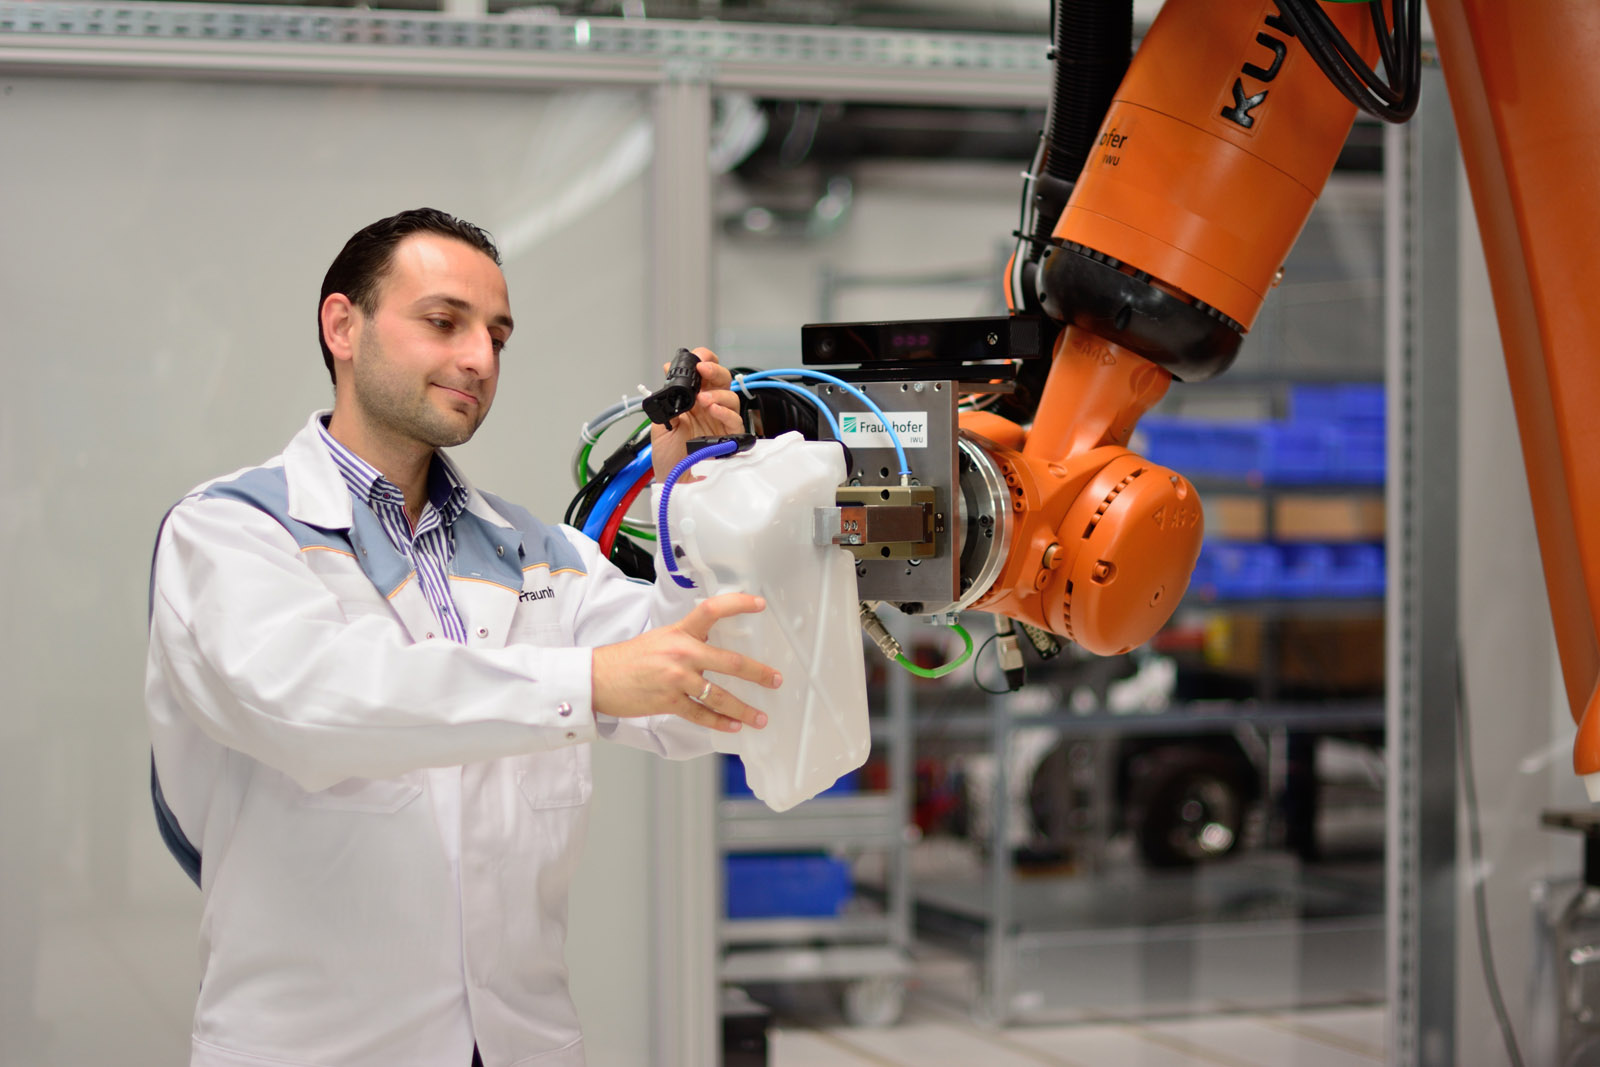 Good teamwork: The robot hands a component to its human colleague.